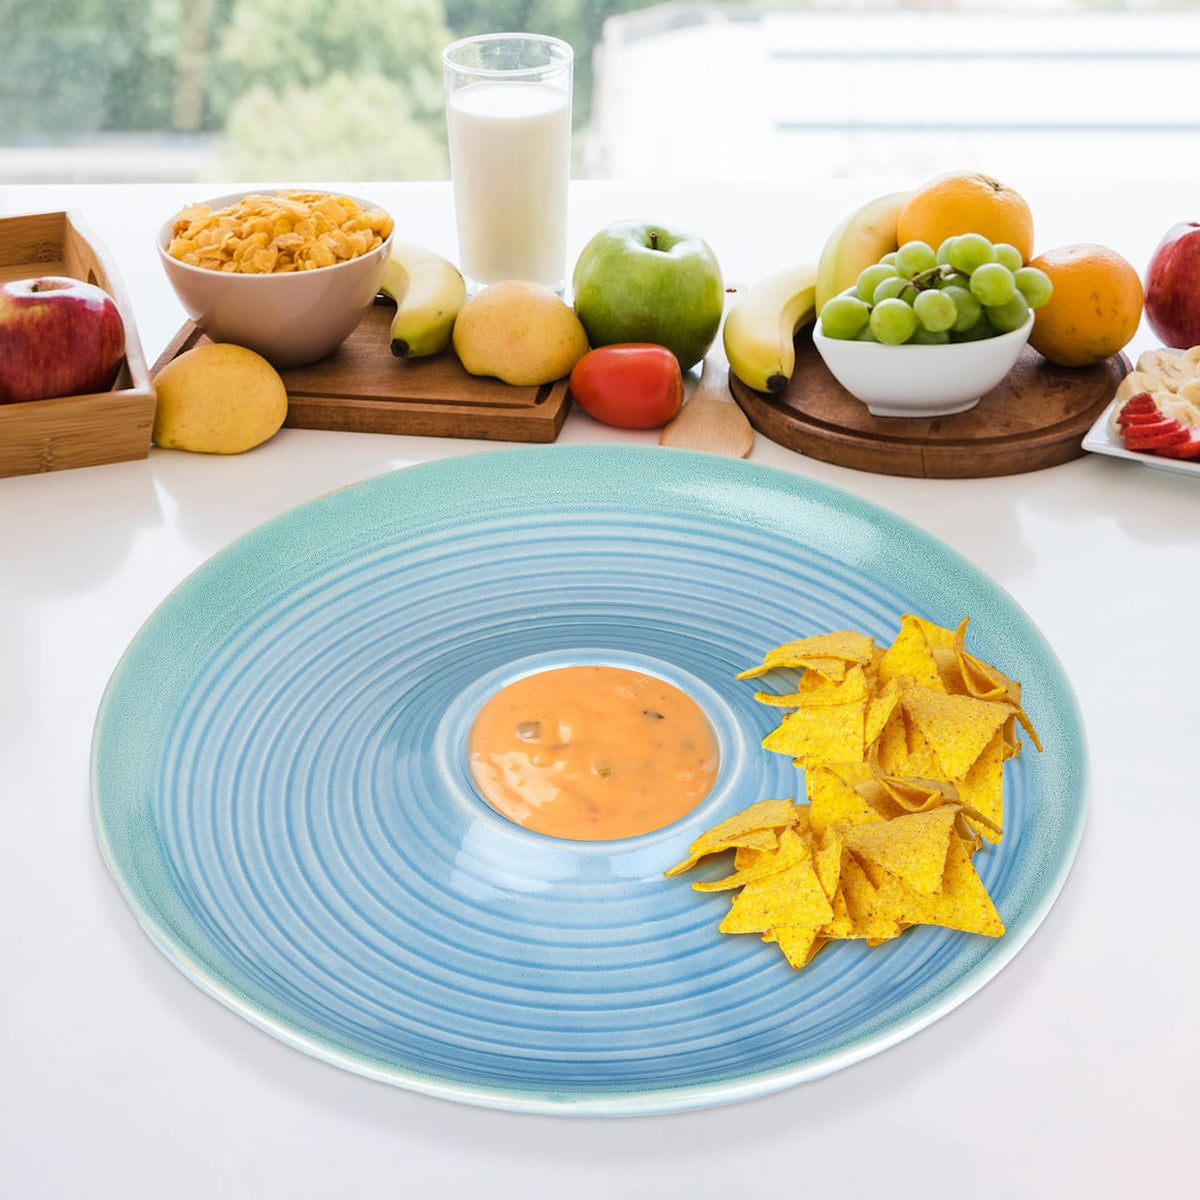 USHA SHRIRAM Ceramic Snack Tray with Dip Bowl | Chutney Bowl | Salsa Dip Tray (10 Inch)| Ceramic Serving Platter | Platter Tray | Snack Tray | Serving Plate | Microwave Safe Plates (Blue)